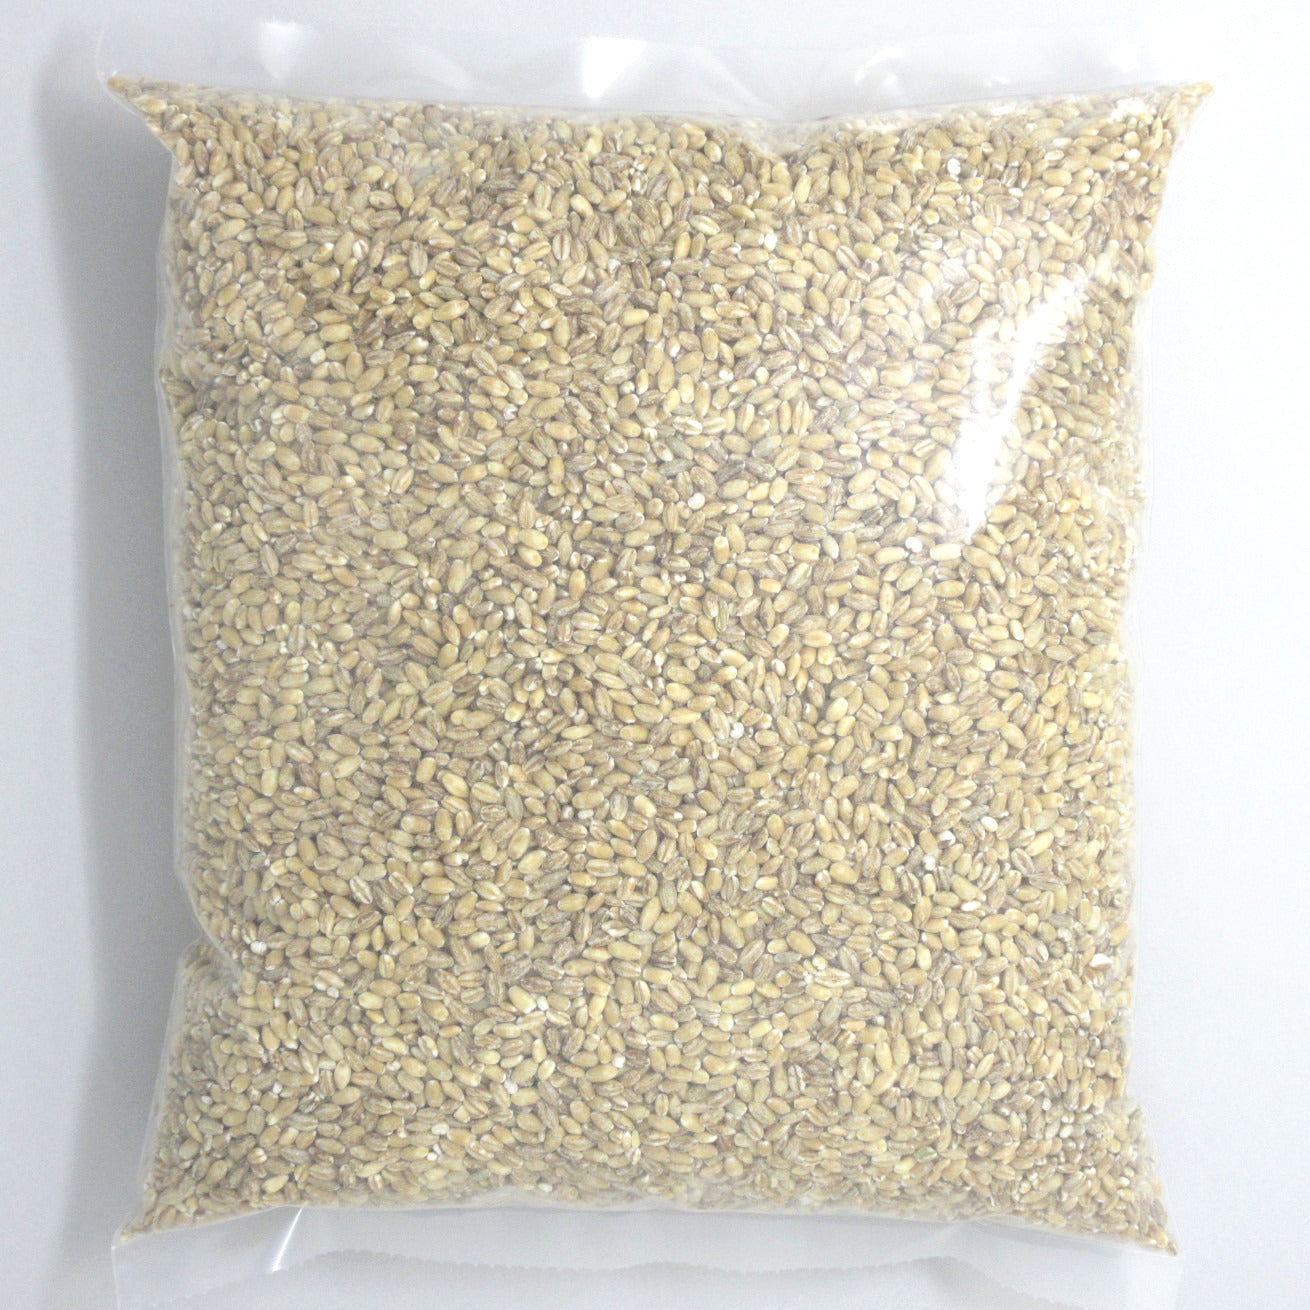 Flour Barrel product image - Pot Barley